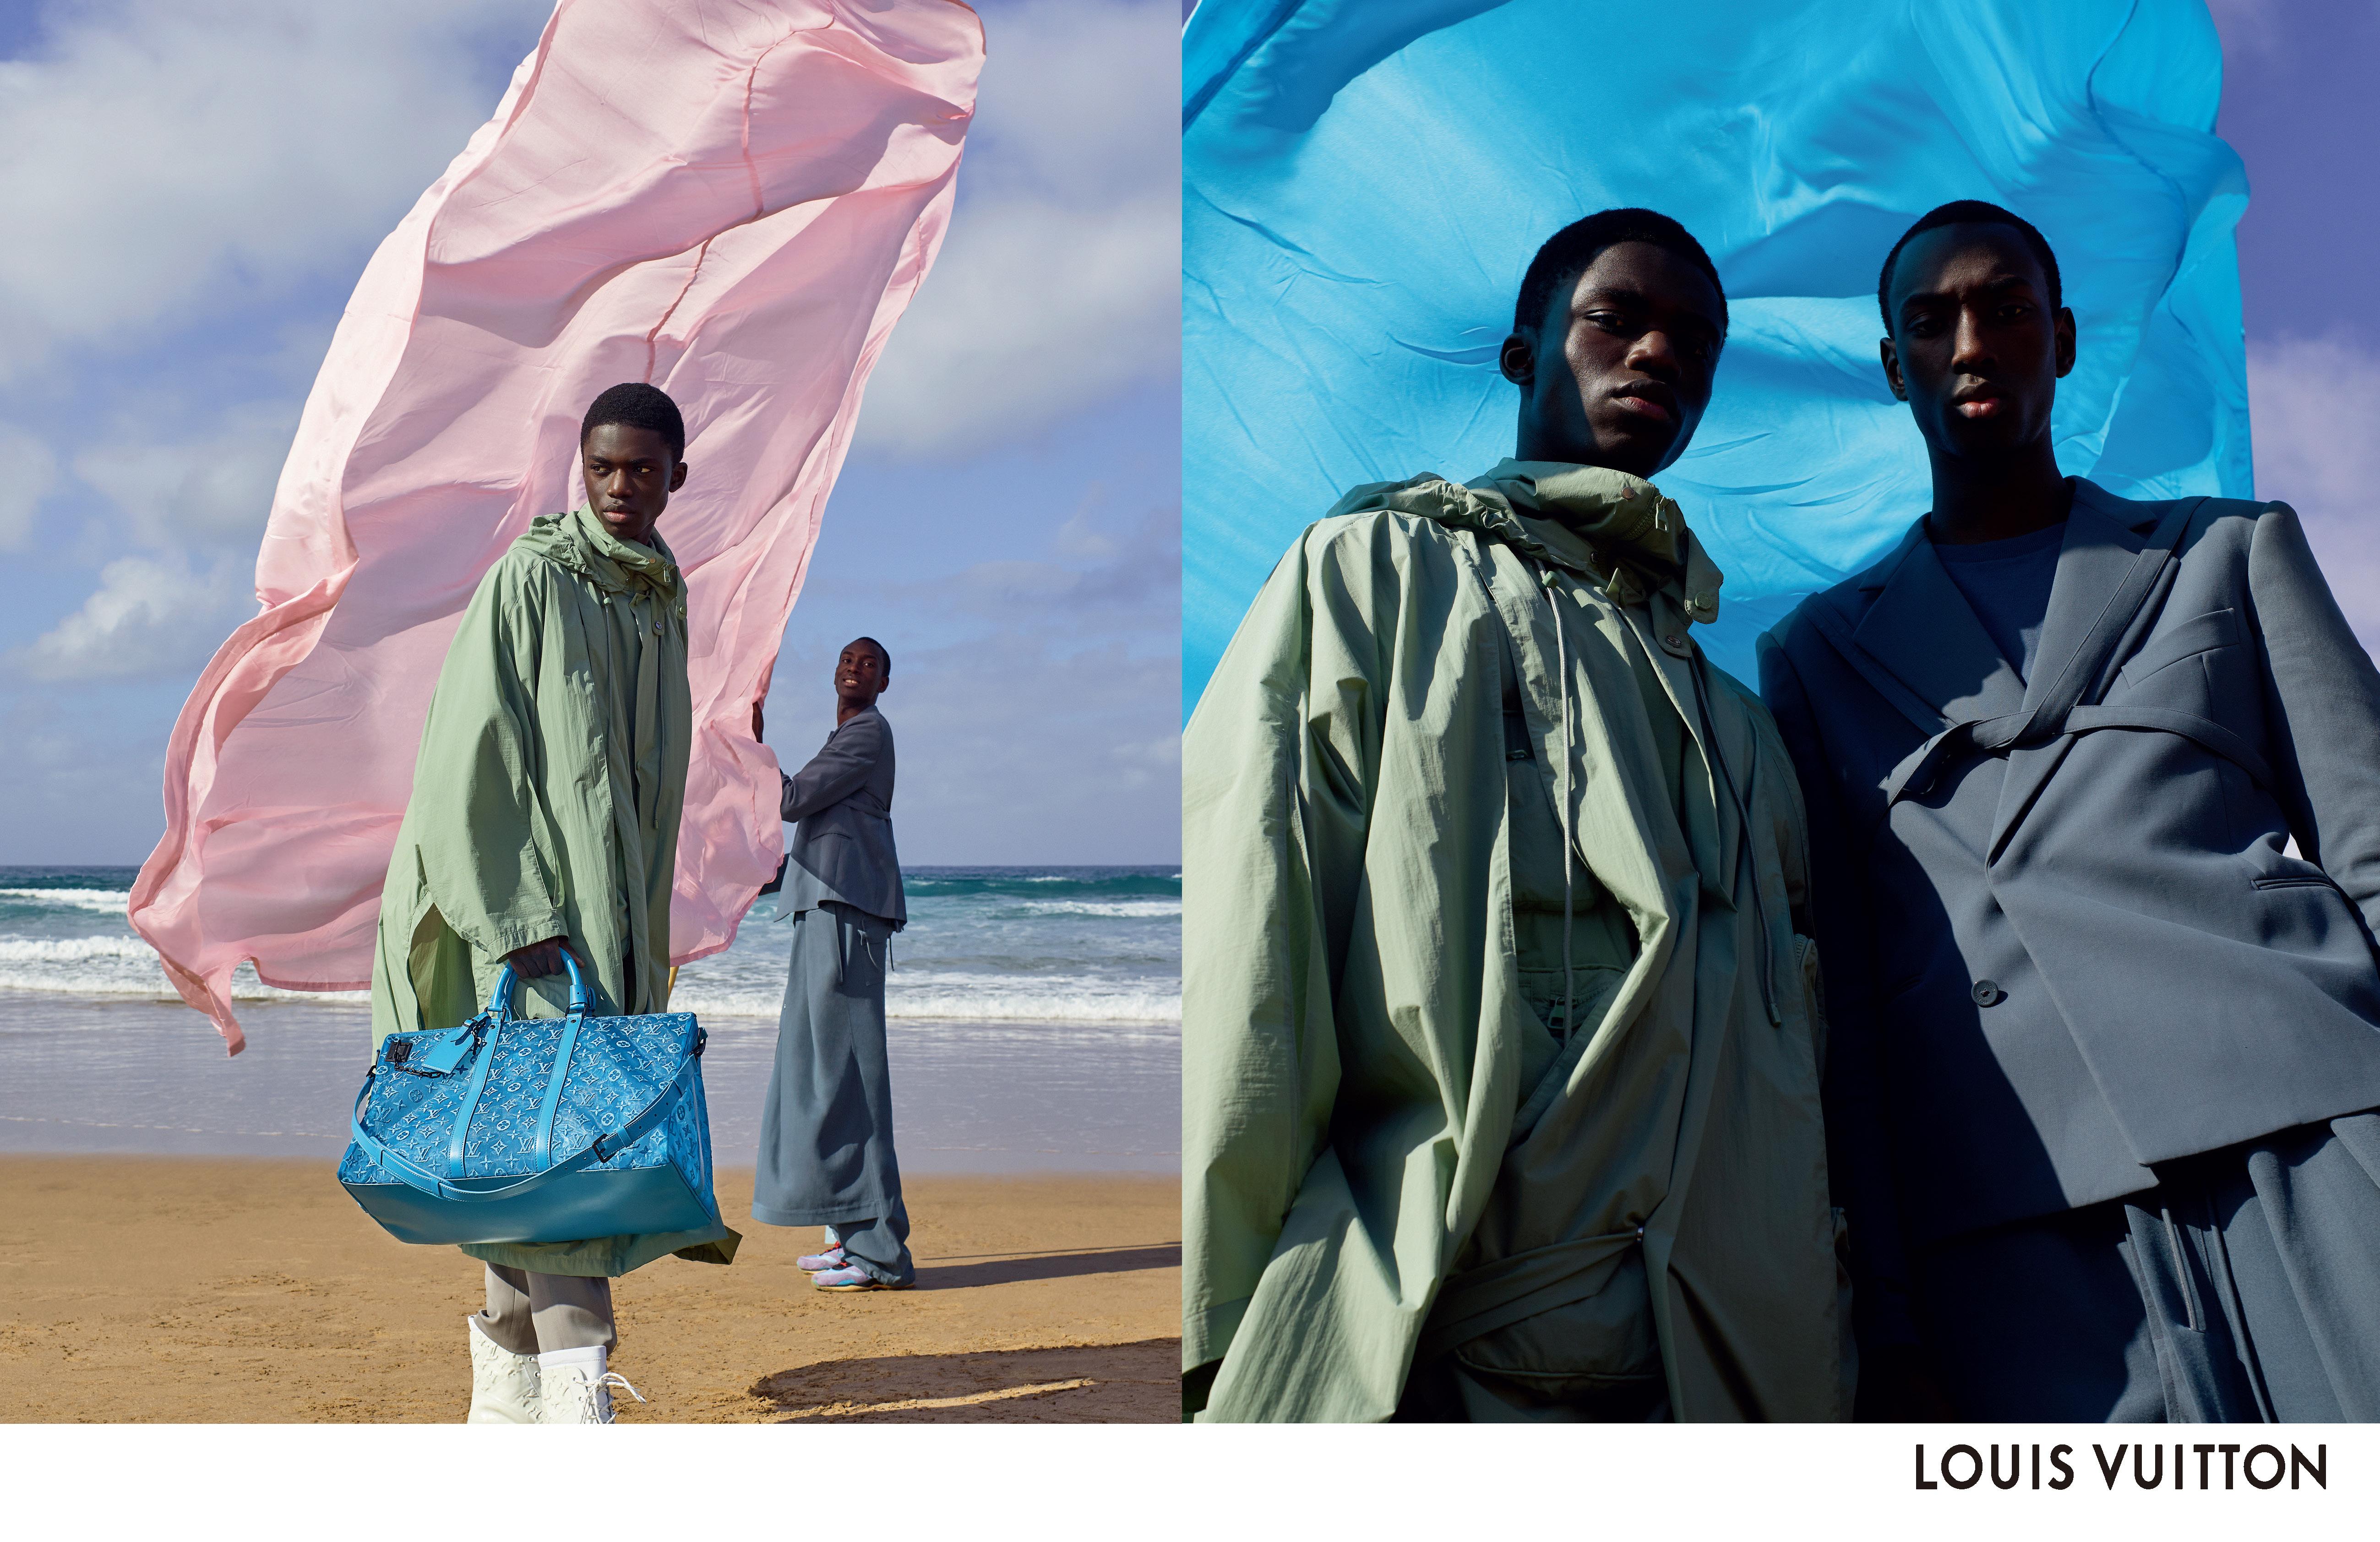 Louis Vuitton Mens S/S 2020 by Viviane Sassen